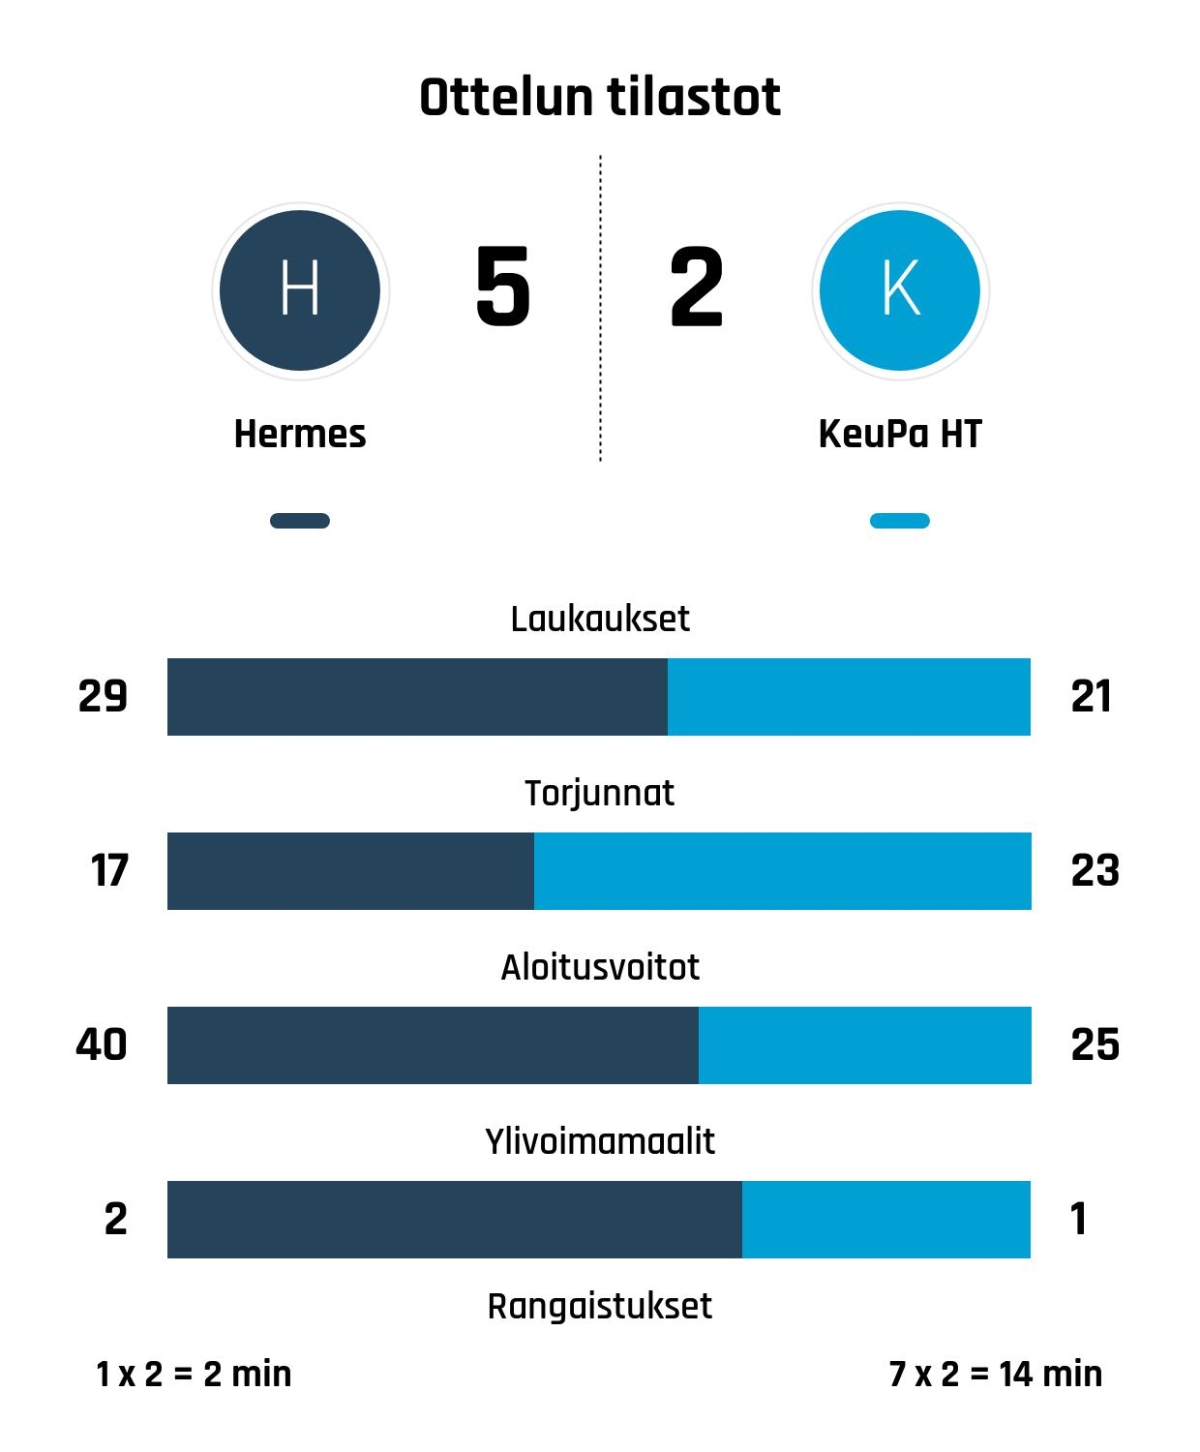 Hermes nousi rinnalle ja ohi – KeuPa HT kaatui 5-2